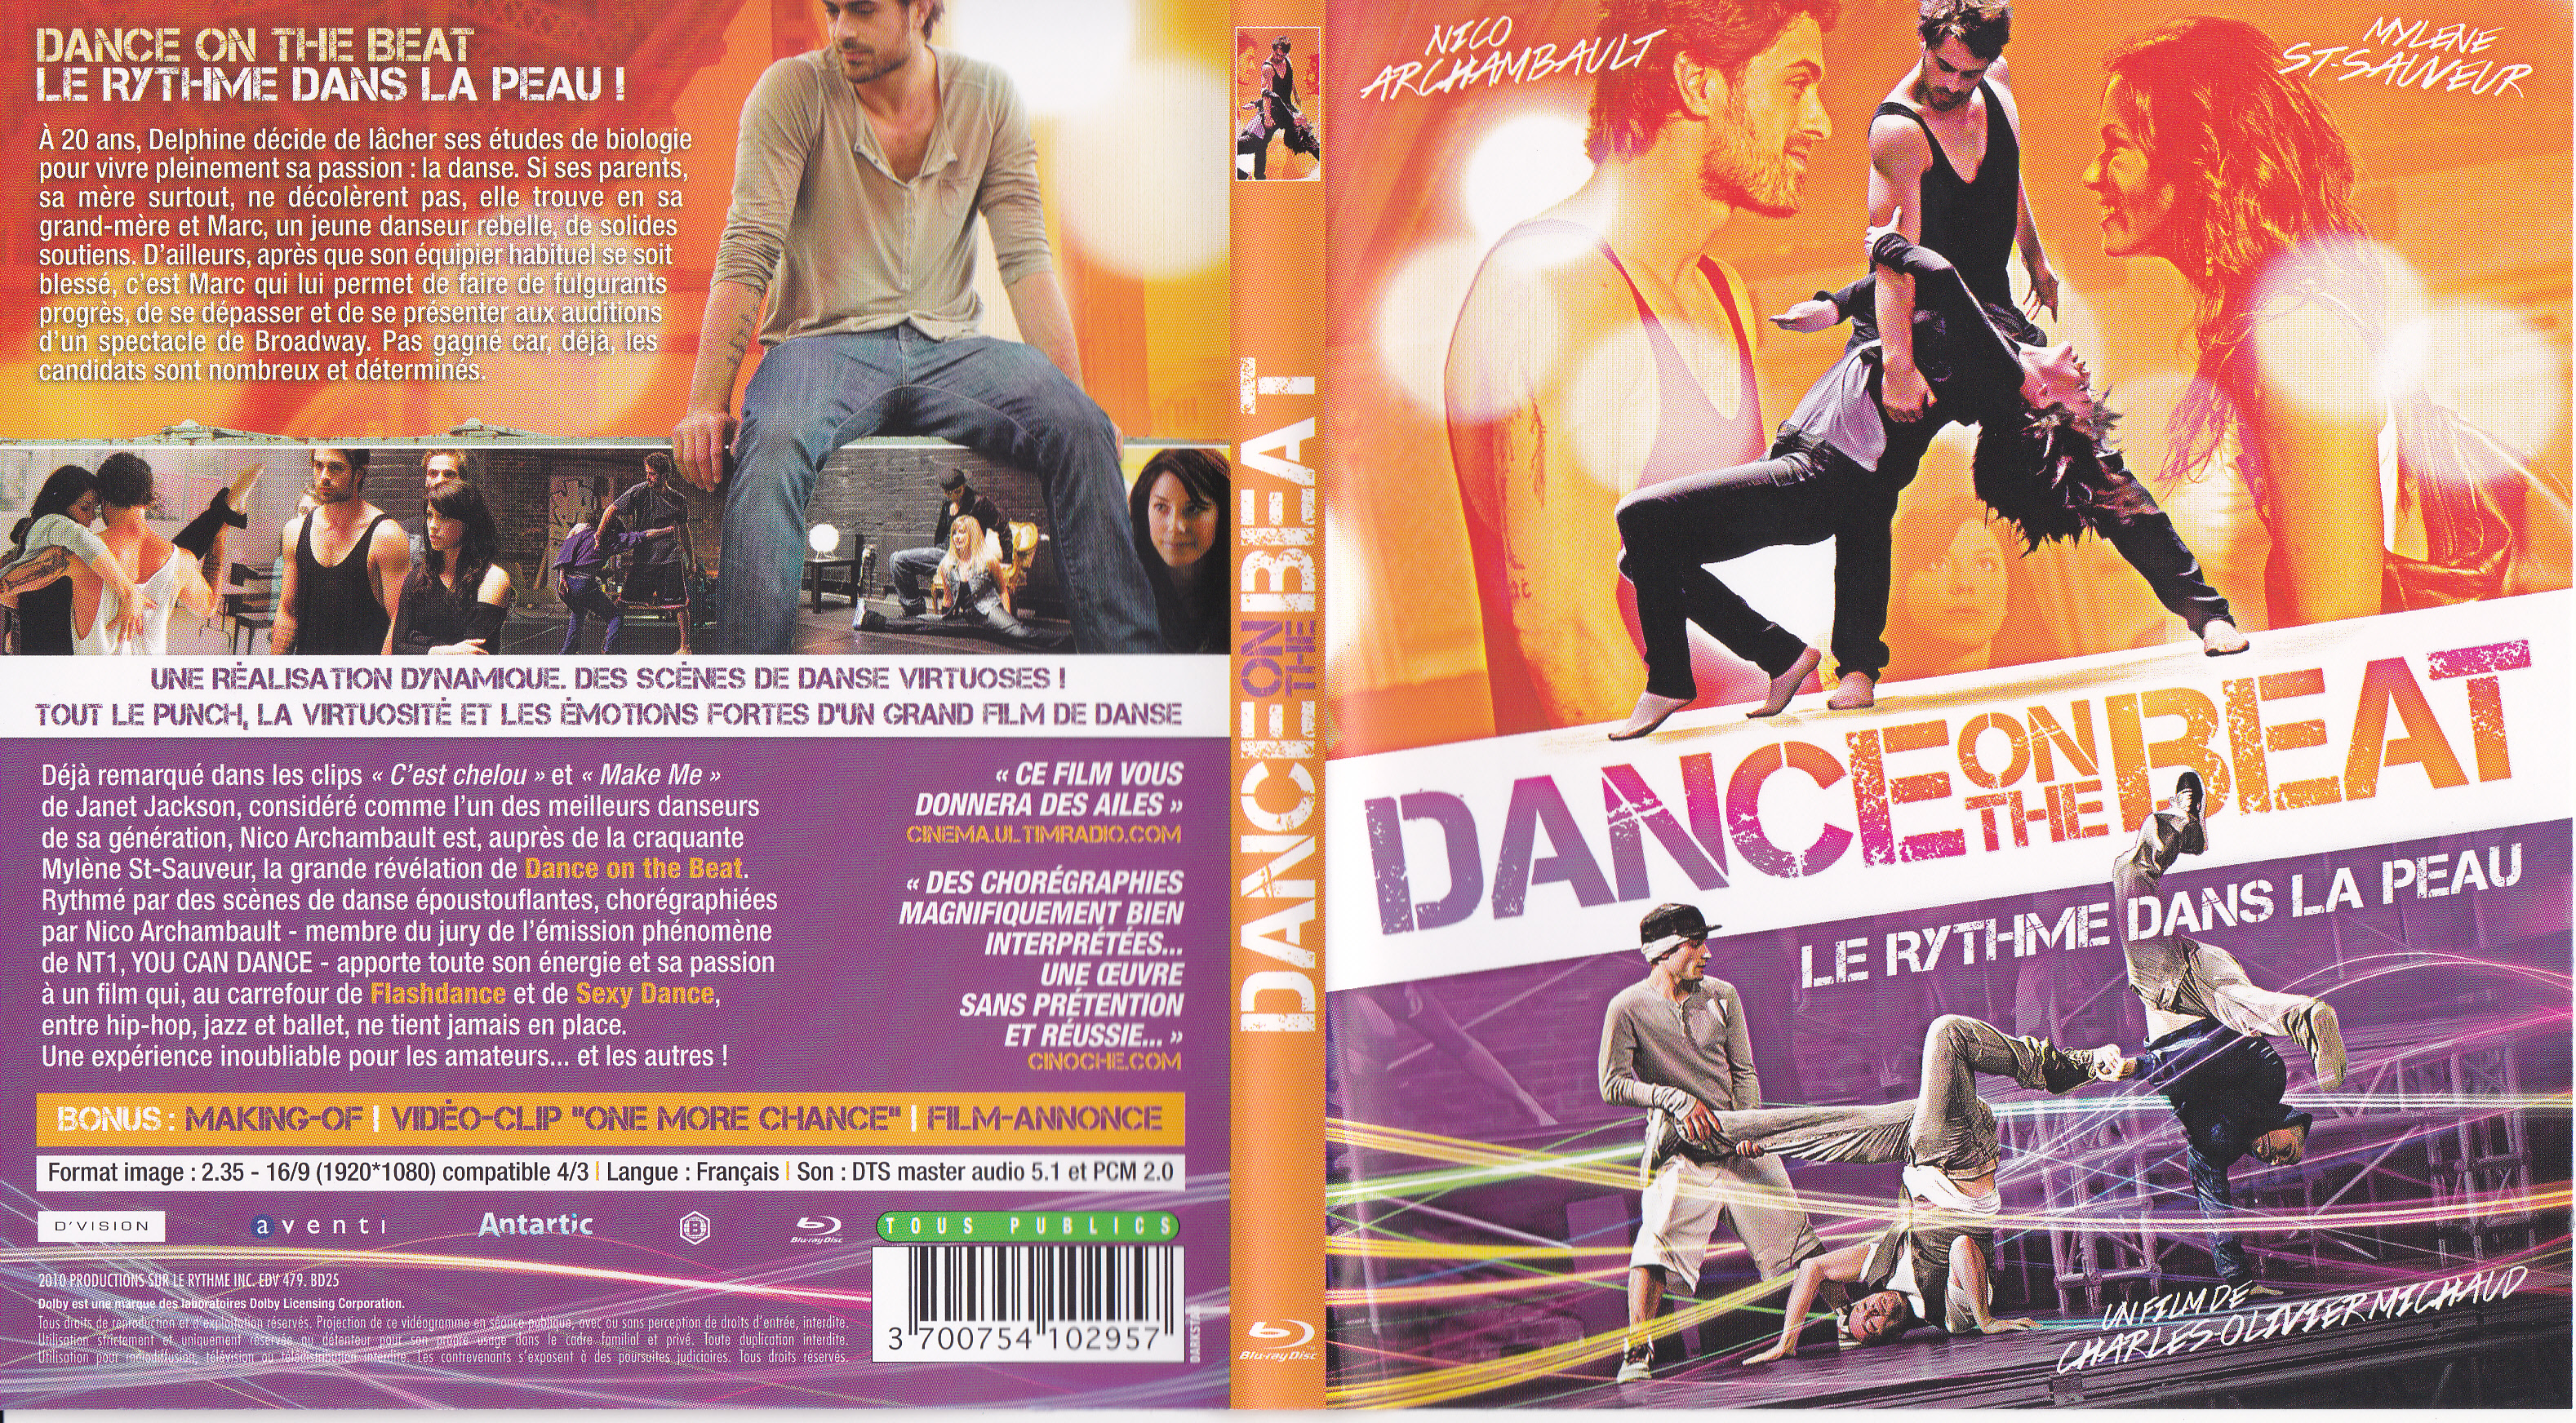 Jaquette DVD Sur le rythme Dance on the beat (BLU-RAY)